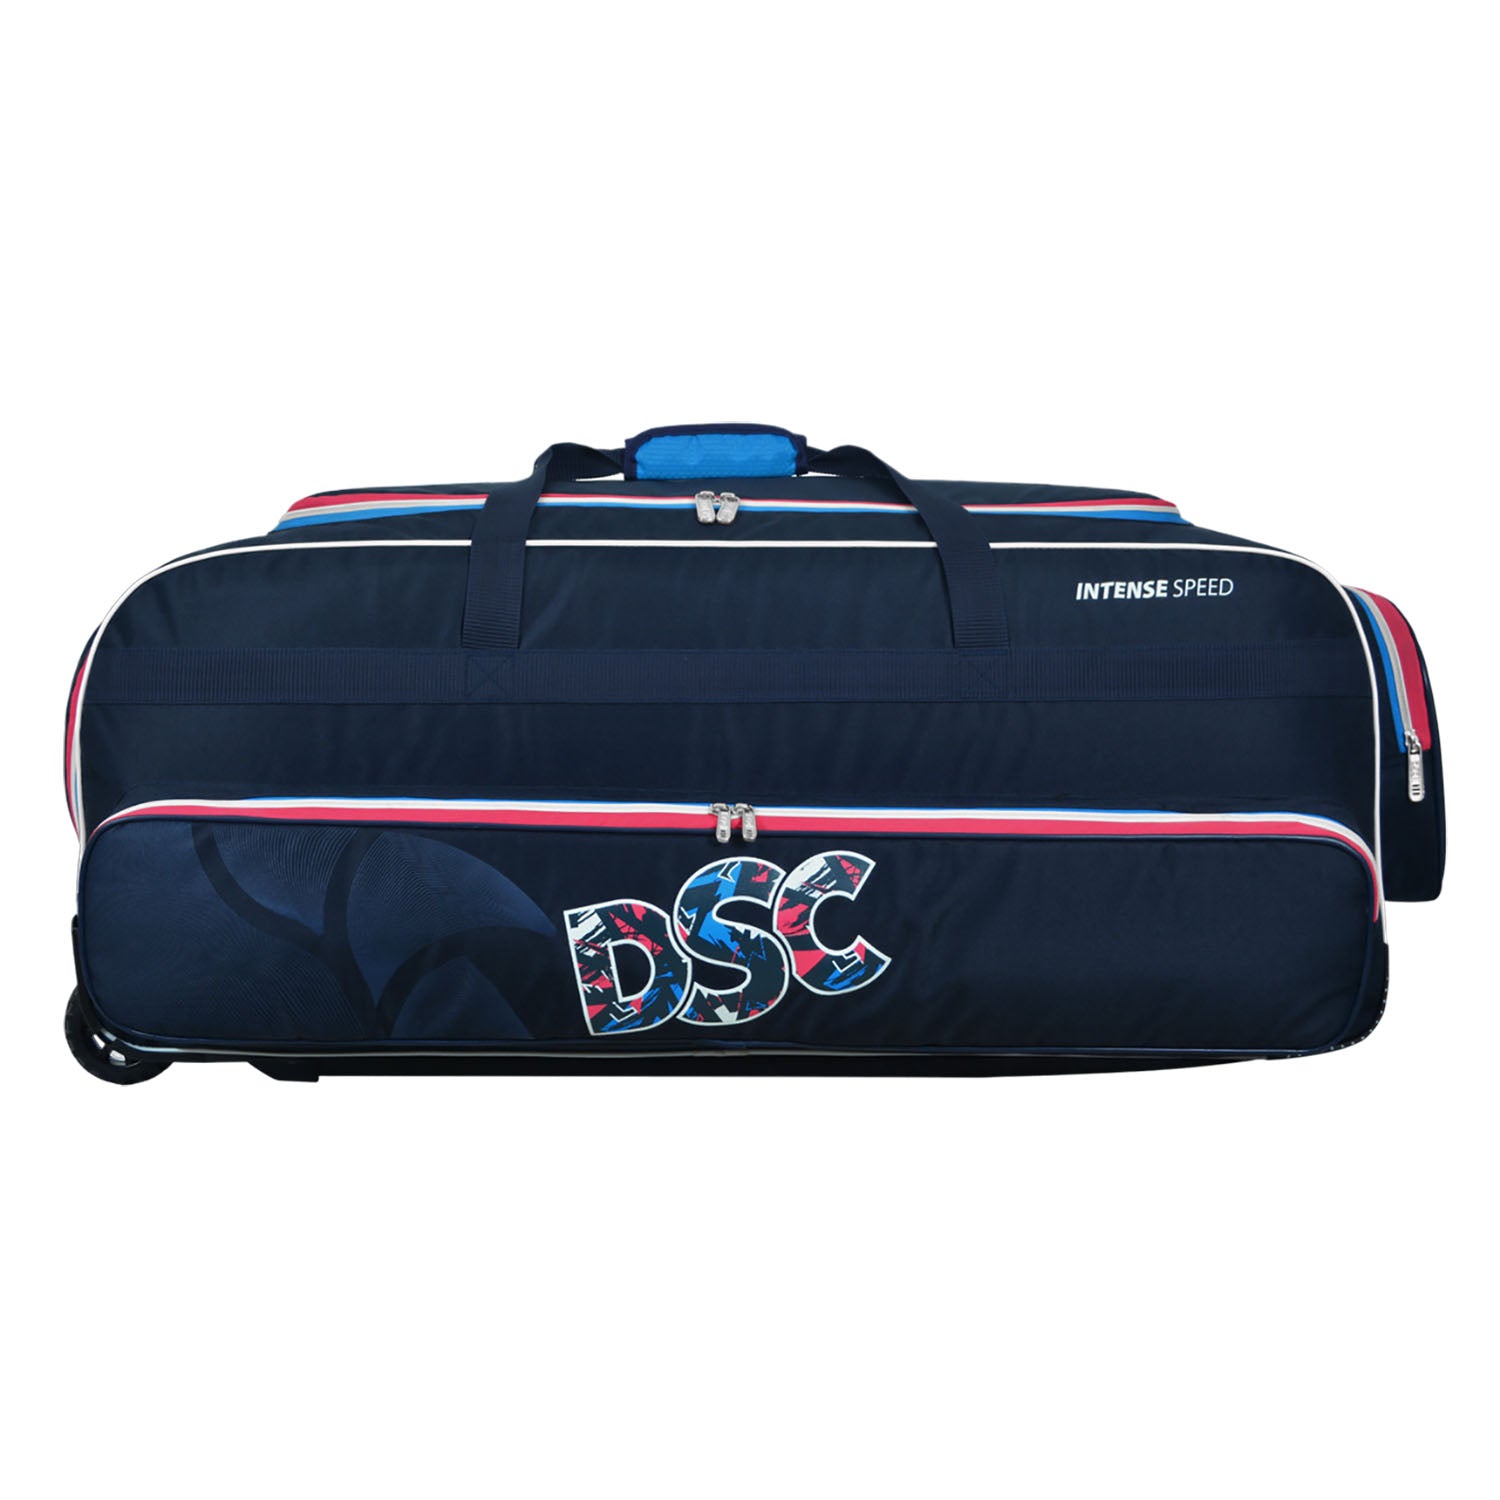 DSC Intense Speed Cricket Kit Bag - Stagsports Online Cricket Store